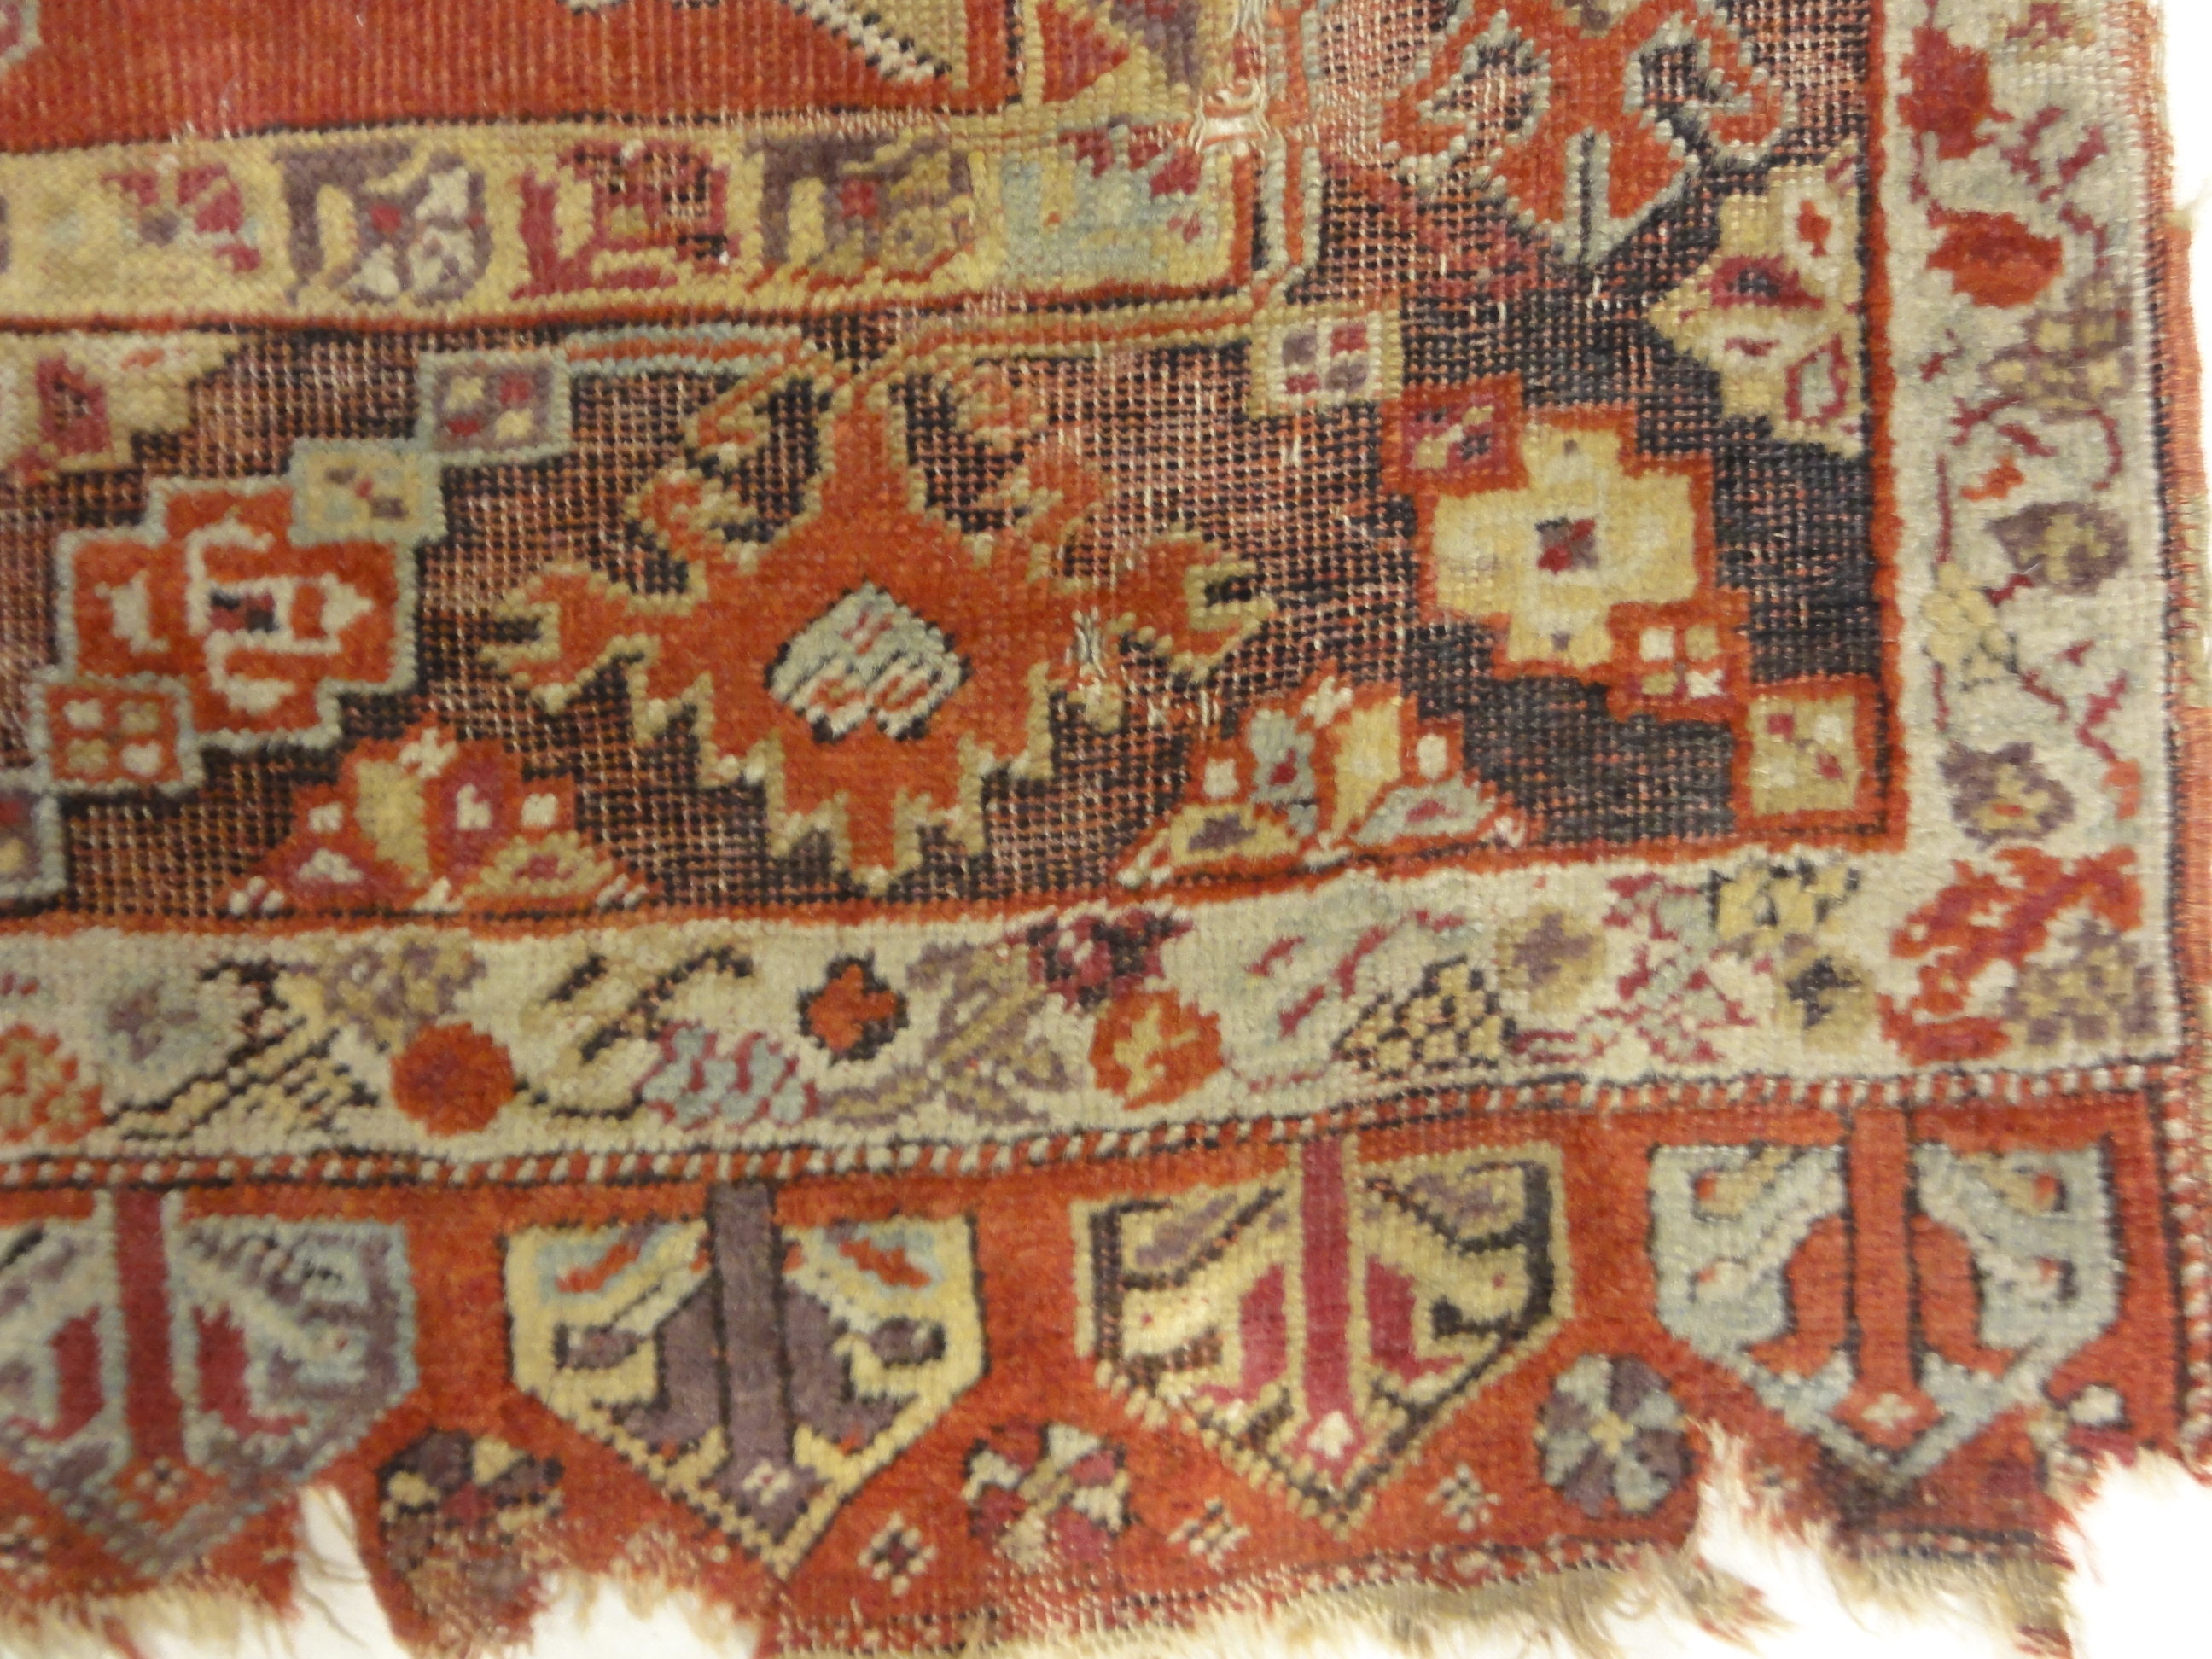 Antique Turkish Handwoven Mugur Rug Genuine Authentic Intricate Woven Carpet Art Santa Barbara Design Center Rugs and More